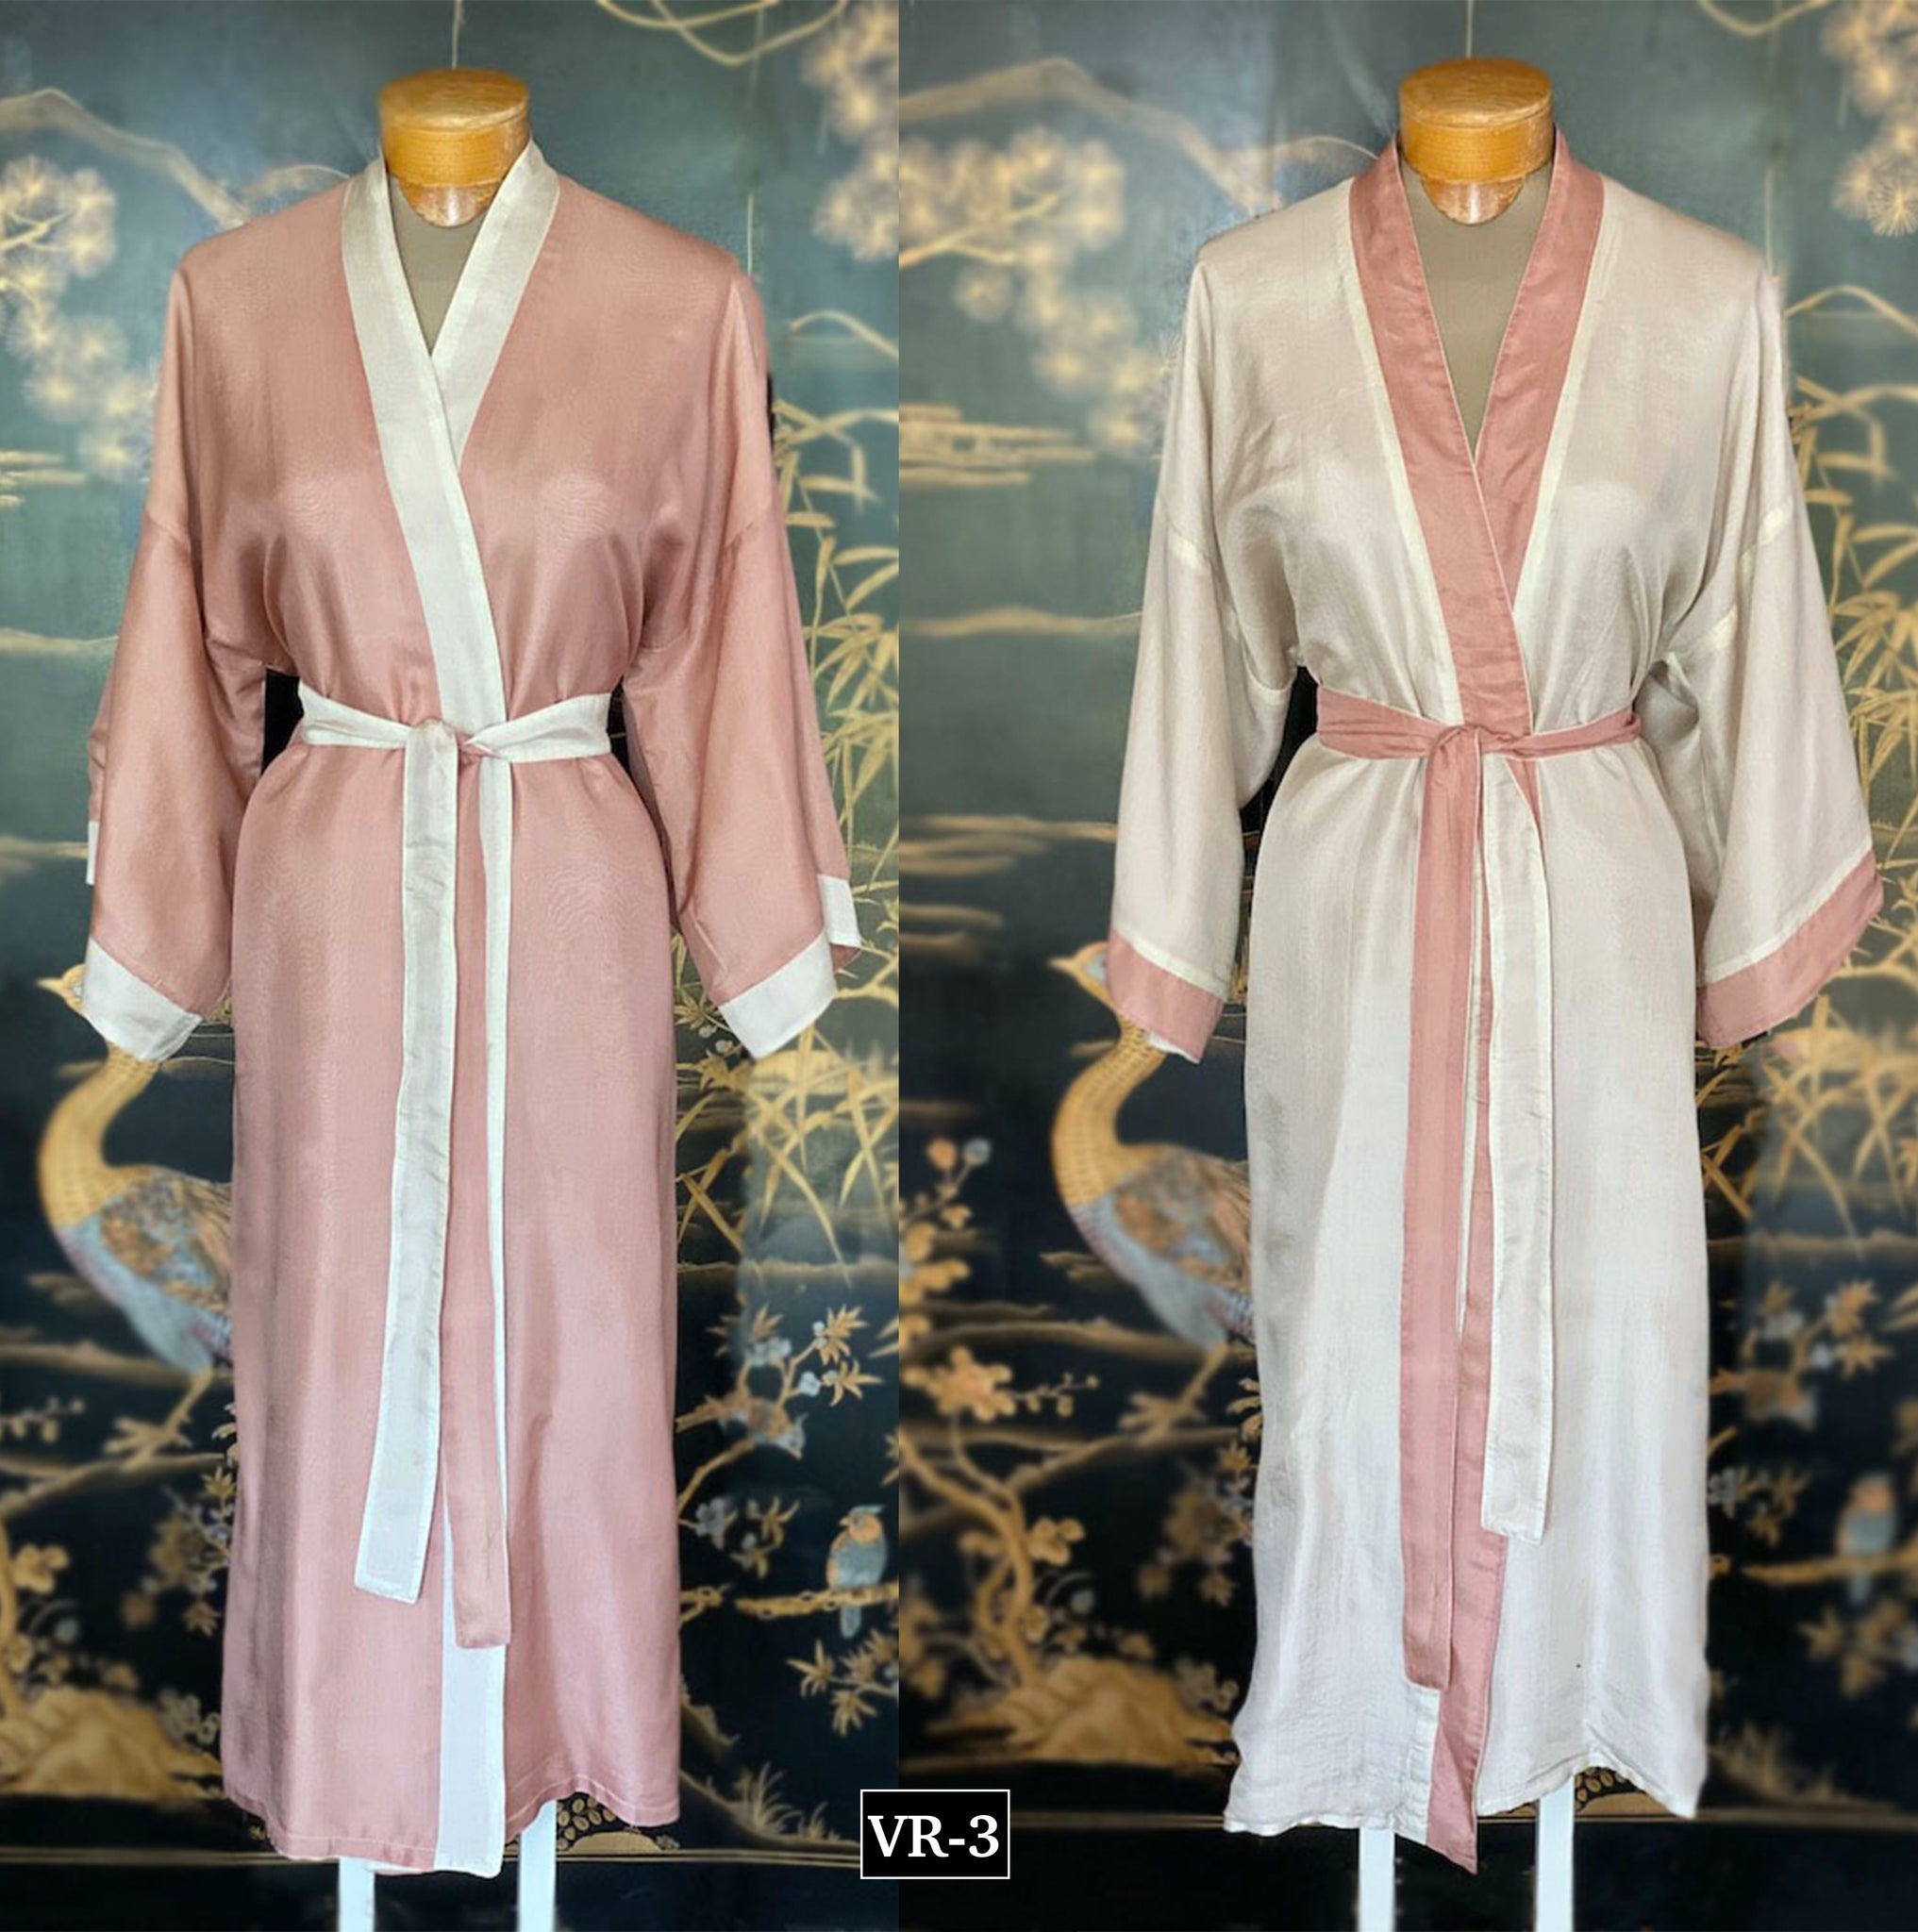 Reversible silk robes handmade in Vietnam